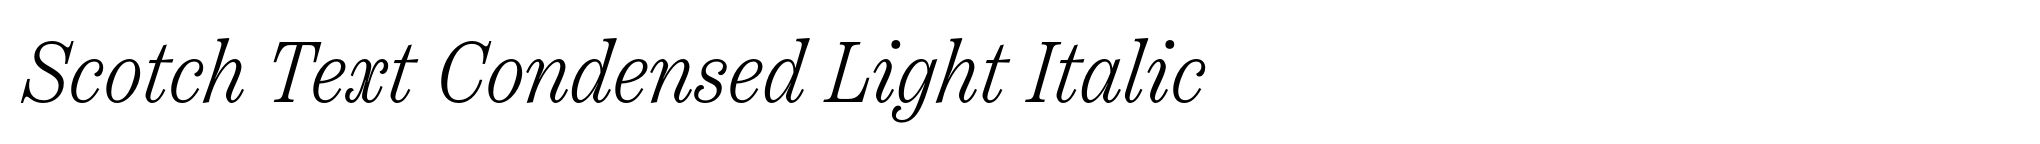 Scotch Text Condensed Light Italic image